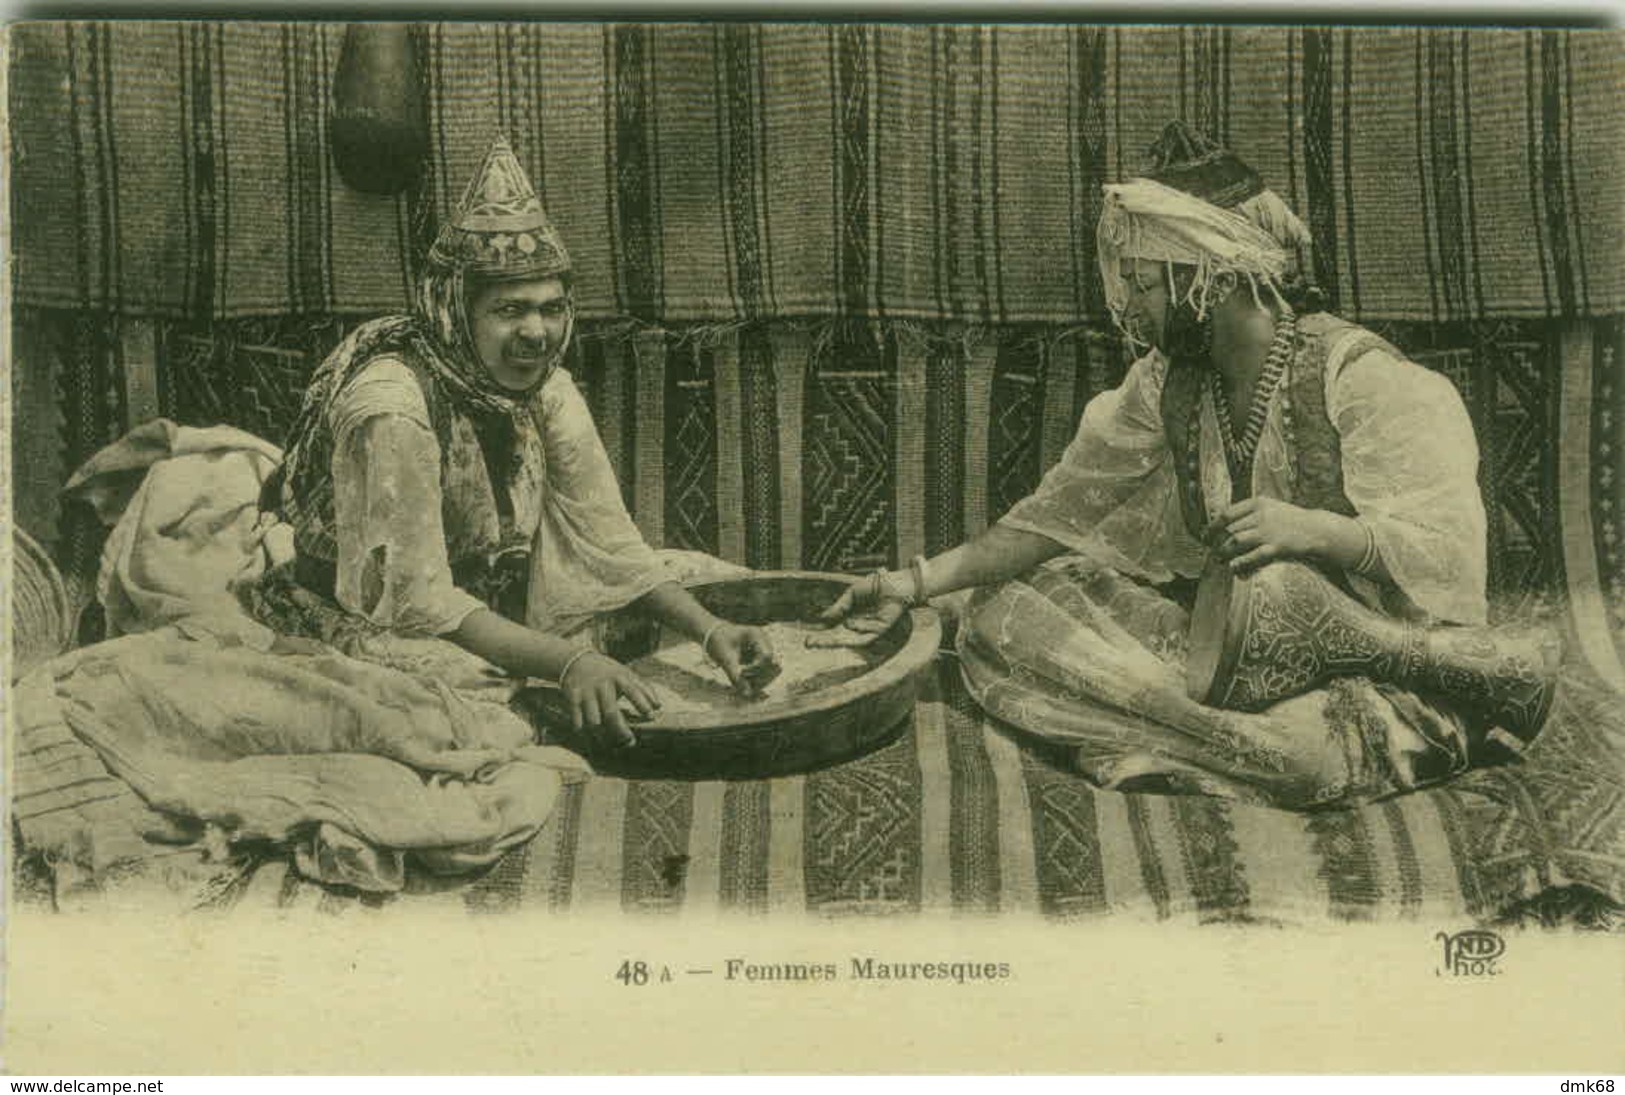 AFRICA - MAURITANIA - FEMMES MAURESQUES - EDIT ND PHOTO - 1910s  (7199) - Mauritania